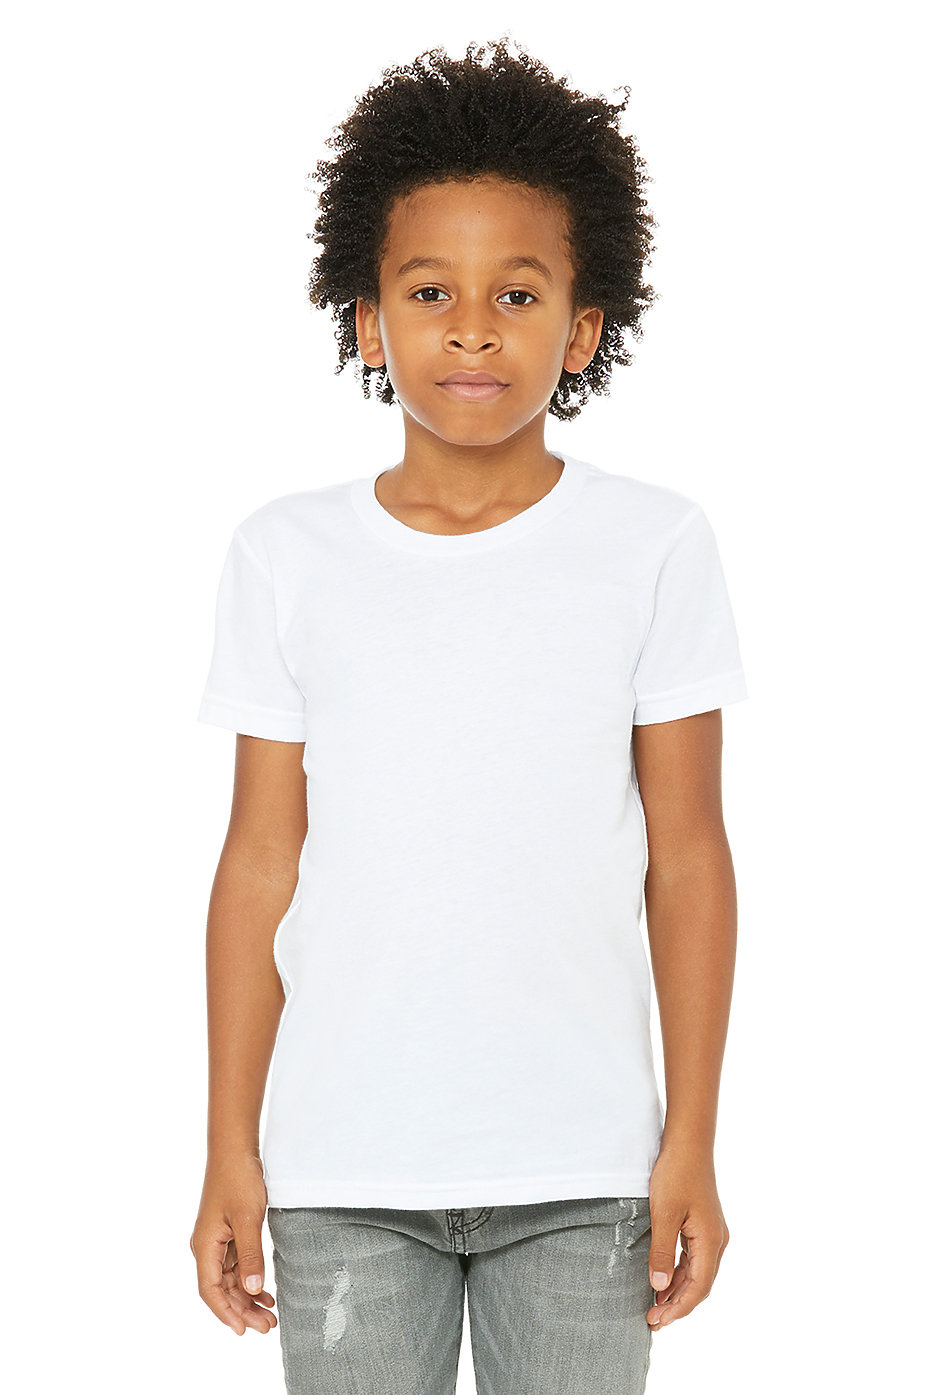 Bella Canvas Youth Shirt Size Chart